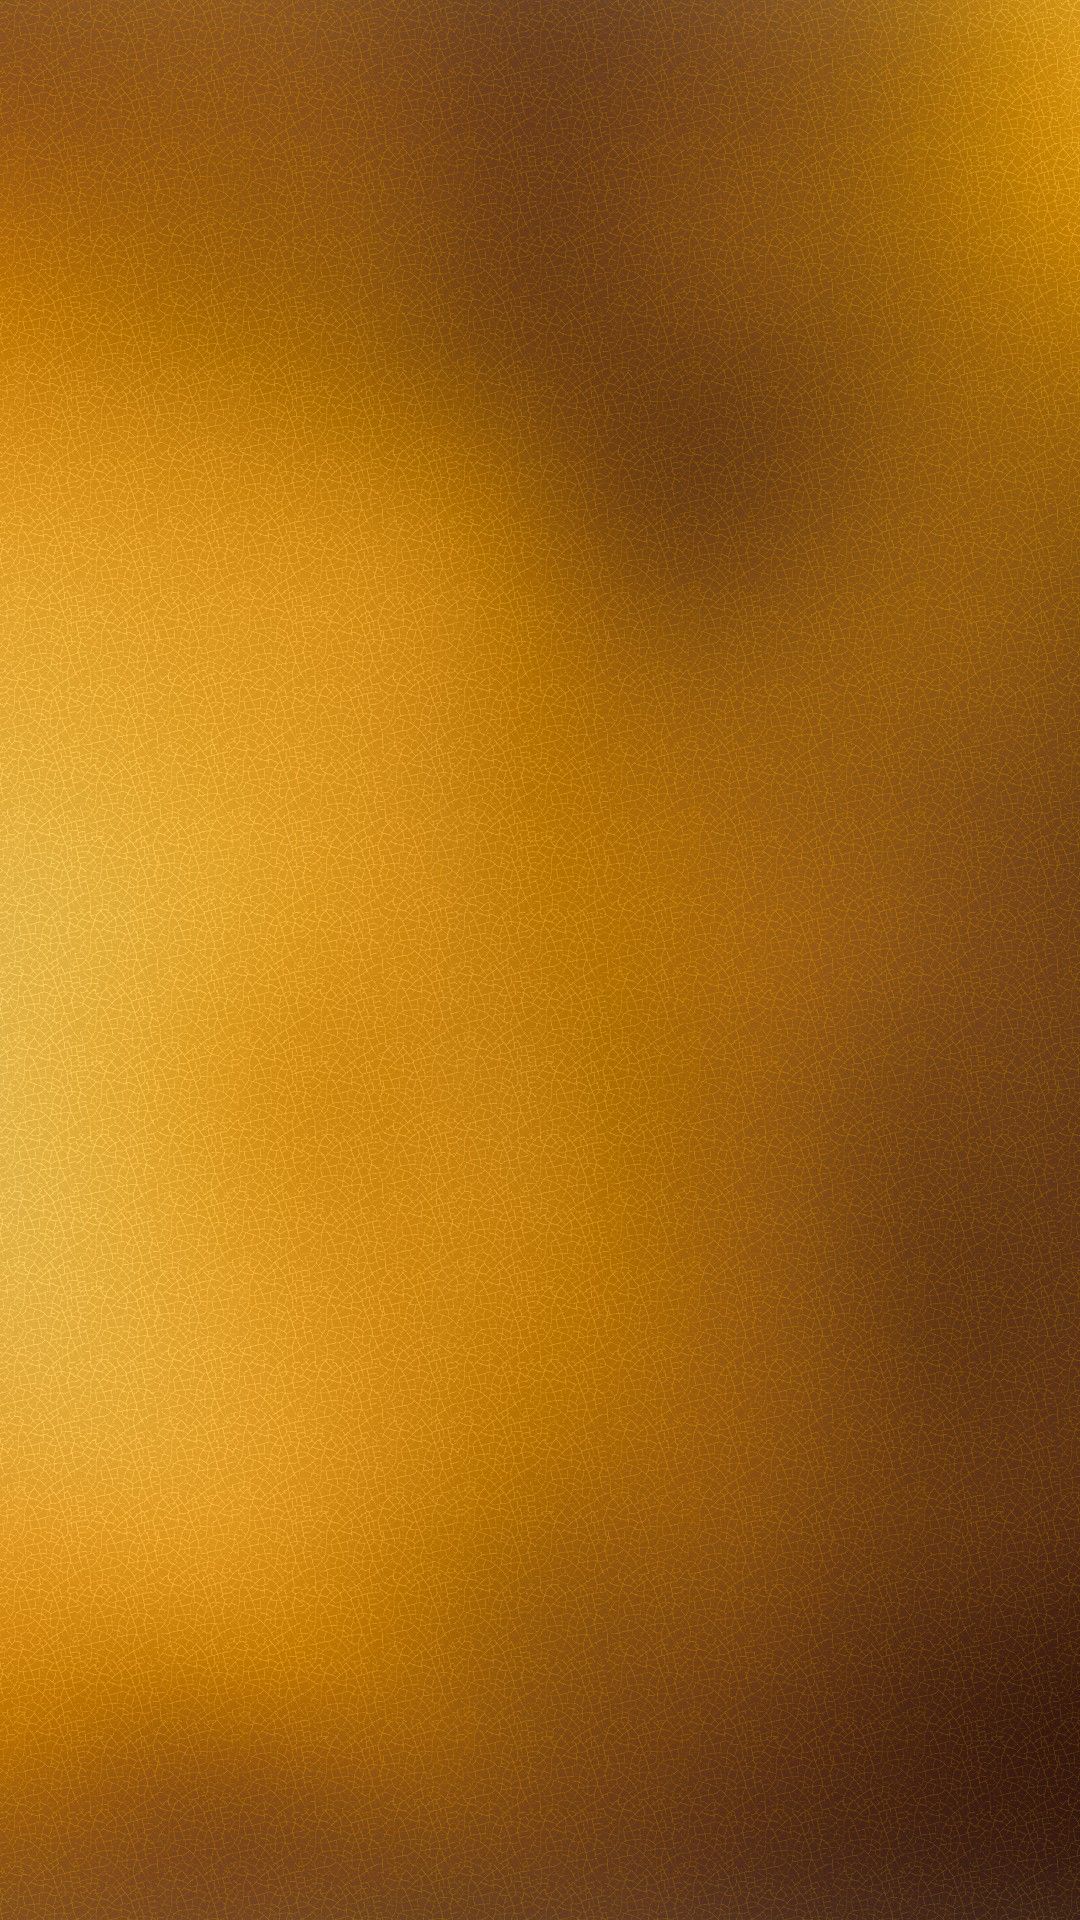 gold colour wallpaper,yellow,orange,sky,amber,brown